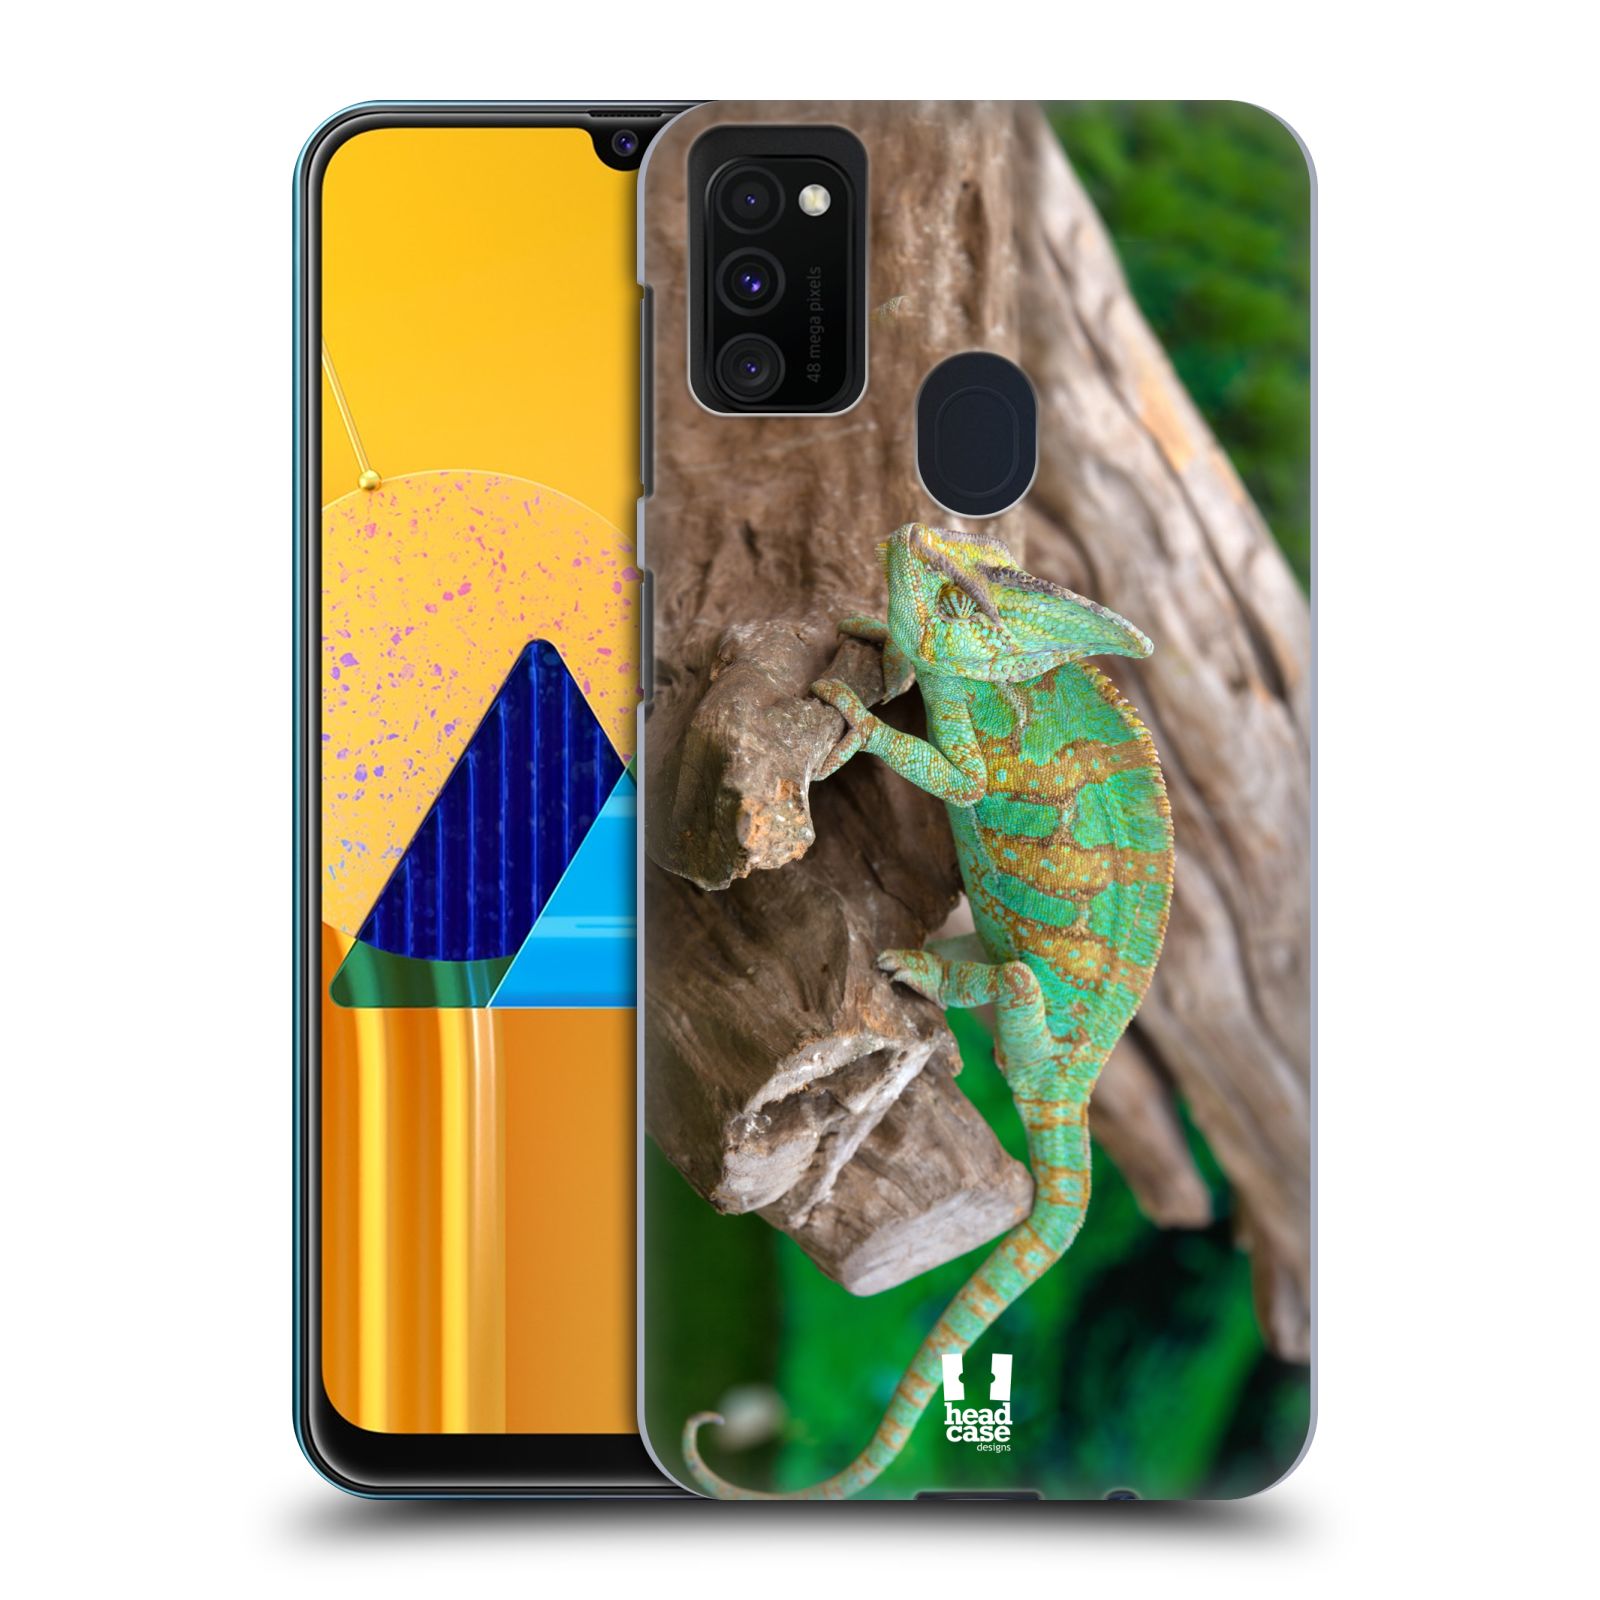 Zadní kryt na mobil Samsung Galaxy M21 vzor slavná zvířata foto chameleon